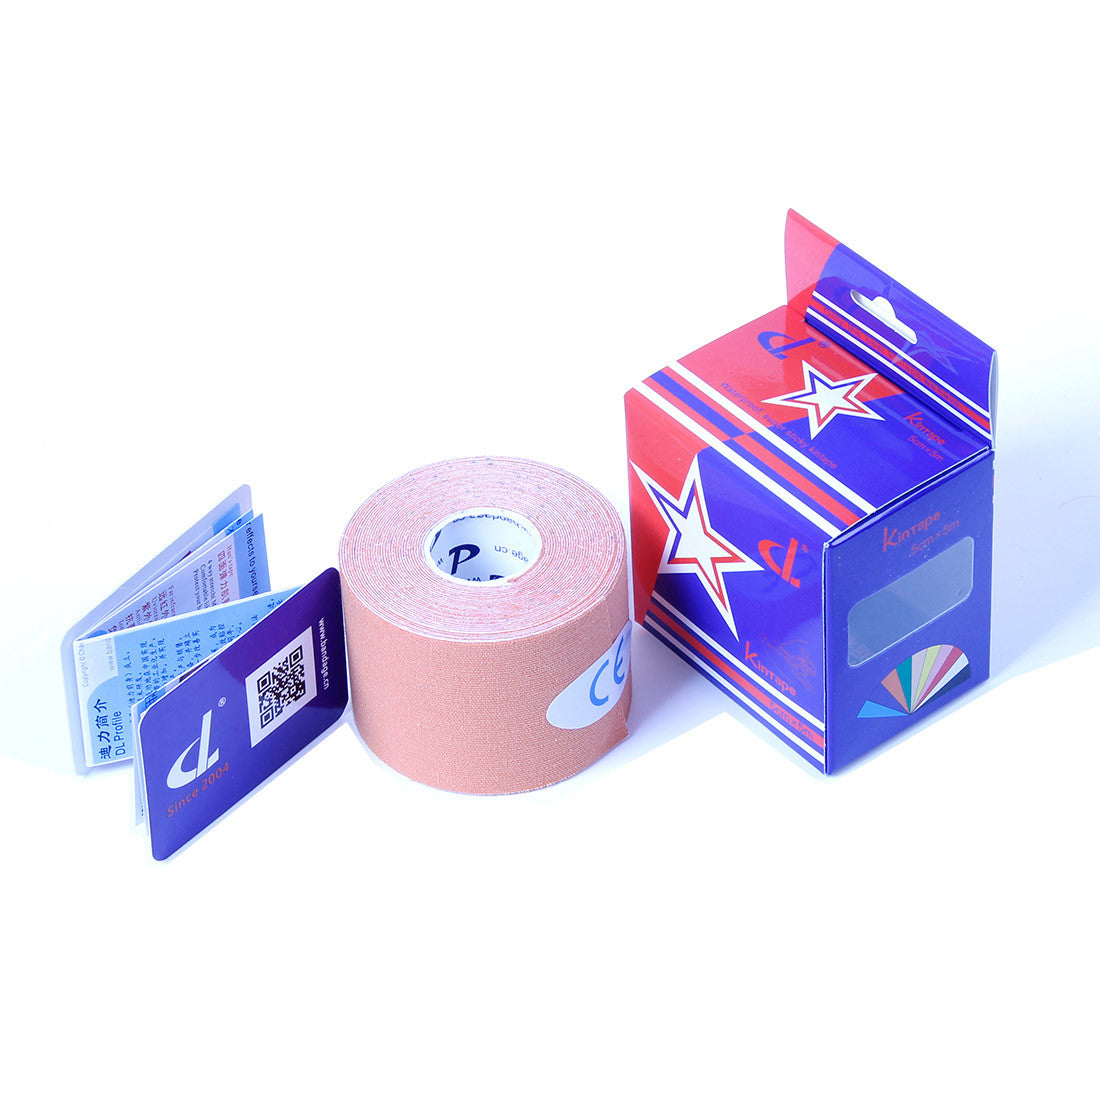 werk hop Fraude Kintape 1 (Kinesiology tape) 5cm x 5m (11 colors options) – DL Medical &  Health